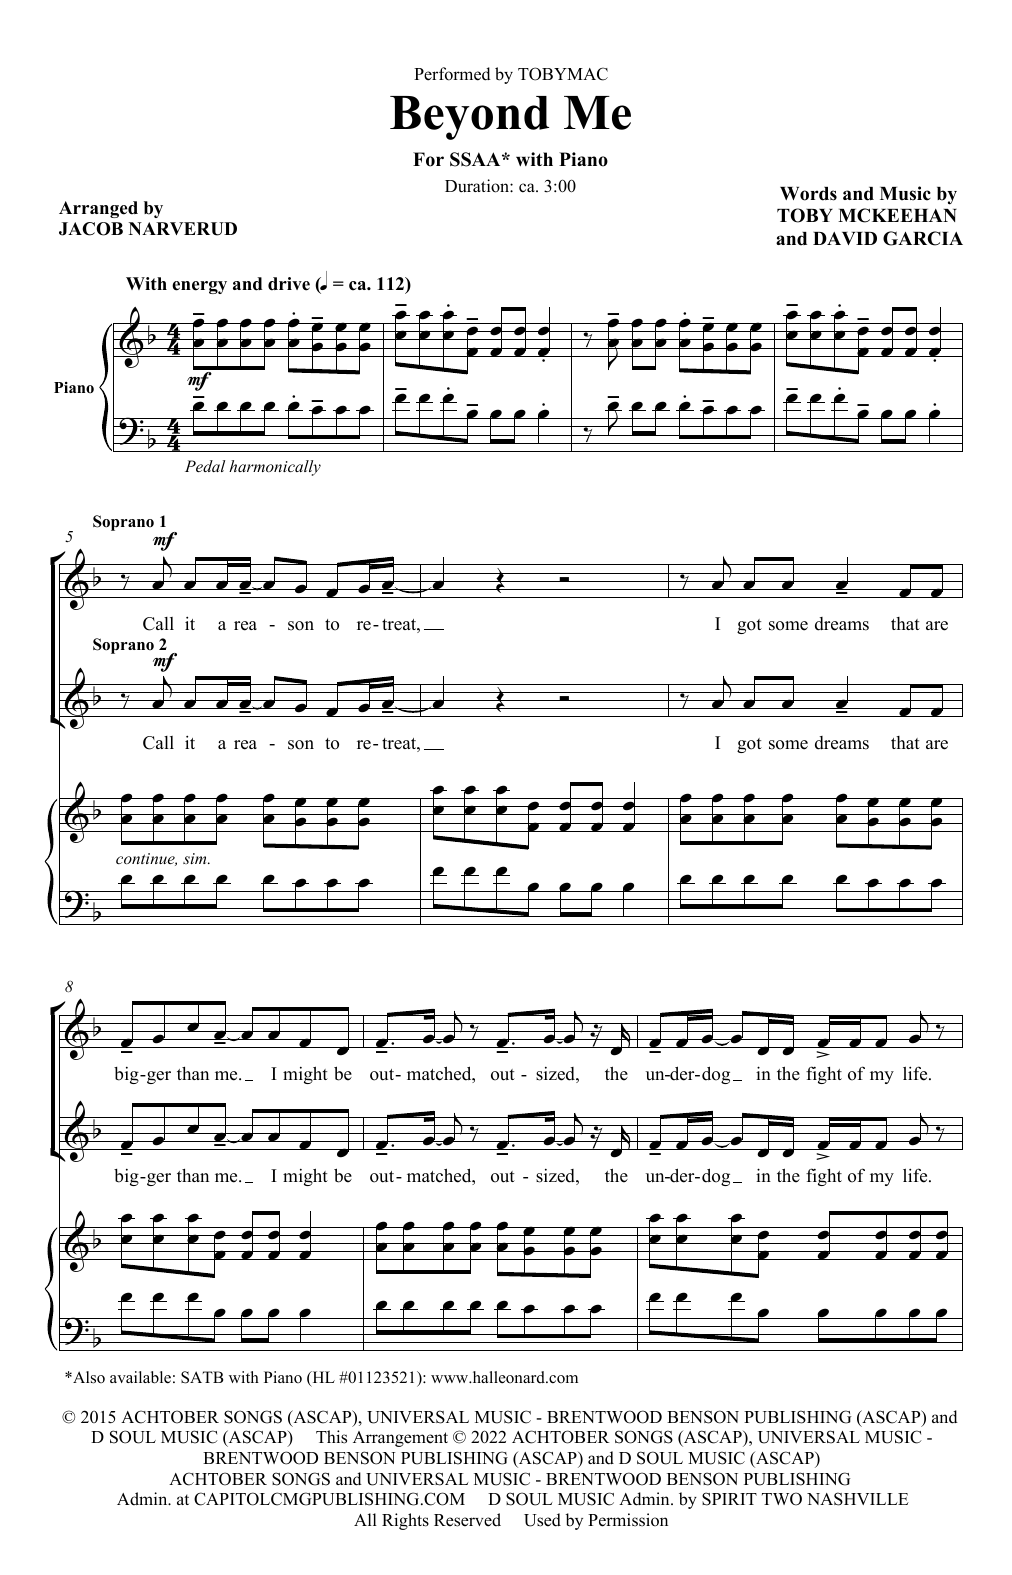 tobyMac Beyond Me (arr. Jacob Narverud) Sheet Music Notes & Chords for SSA Choir - Download or Print PDF